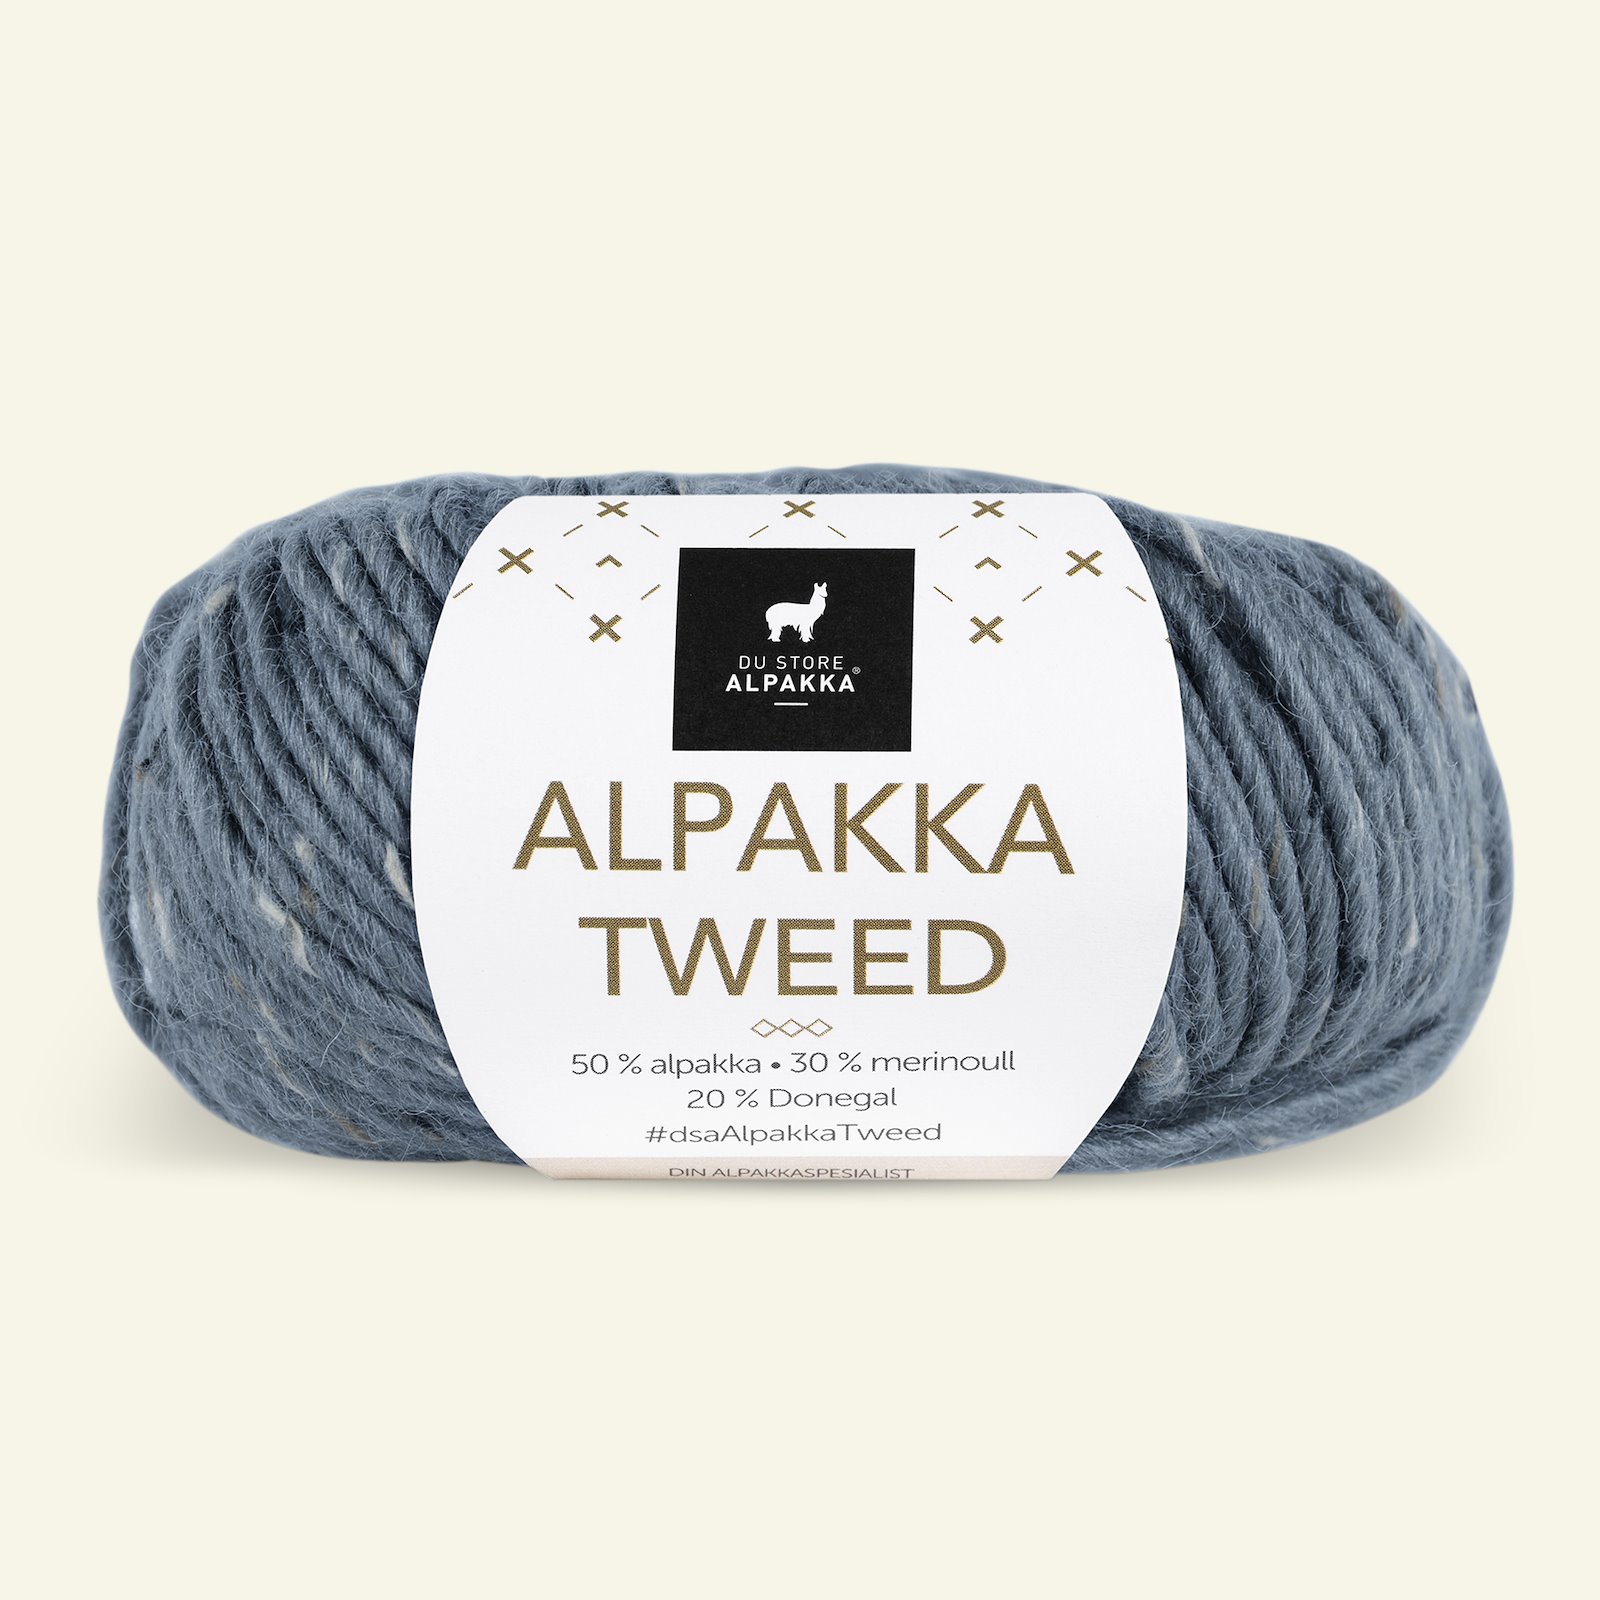 Du Store Alpakka, tweed wool yarn "Alpakka Tweed", blue (104) 90000522_pack